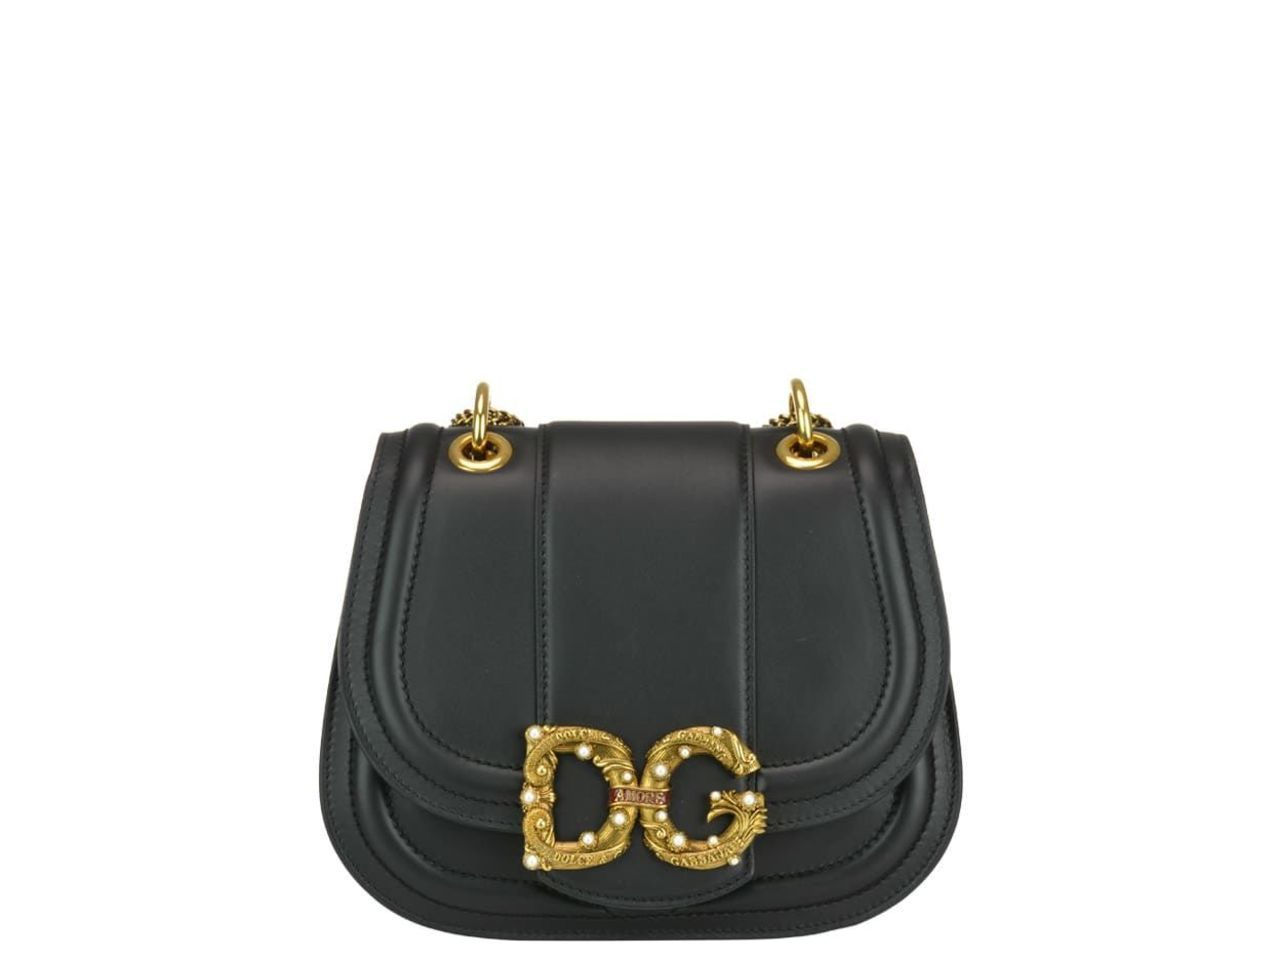 Dolce & Gabbana Dg Amore Bag